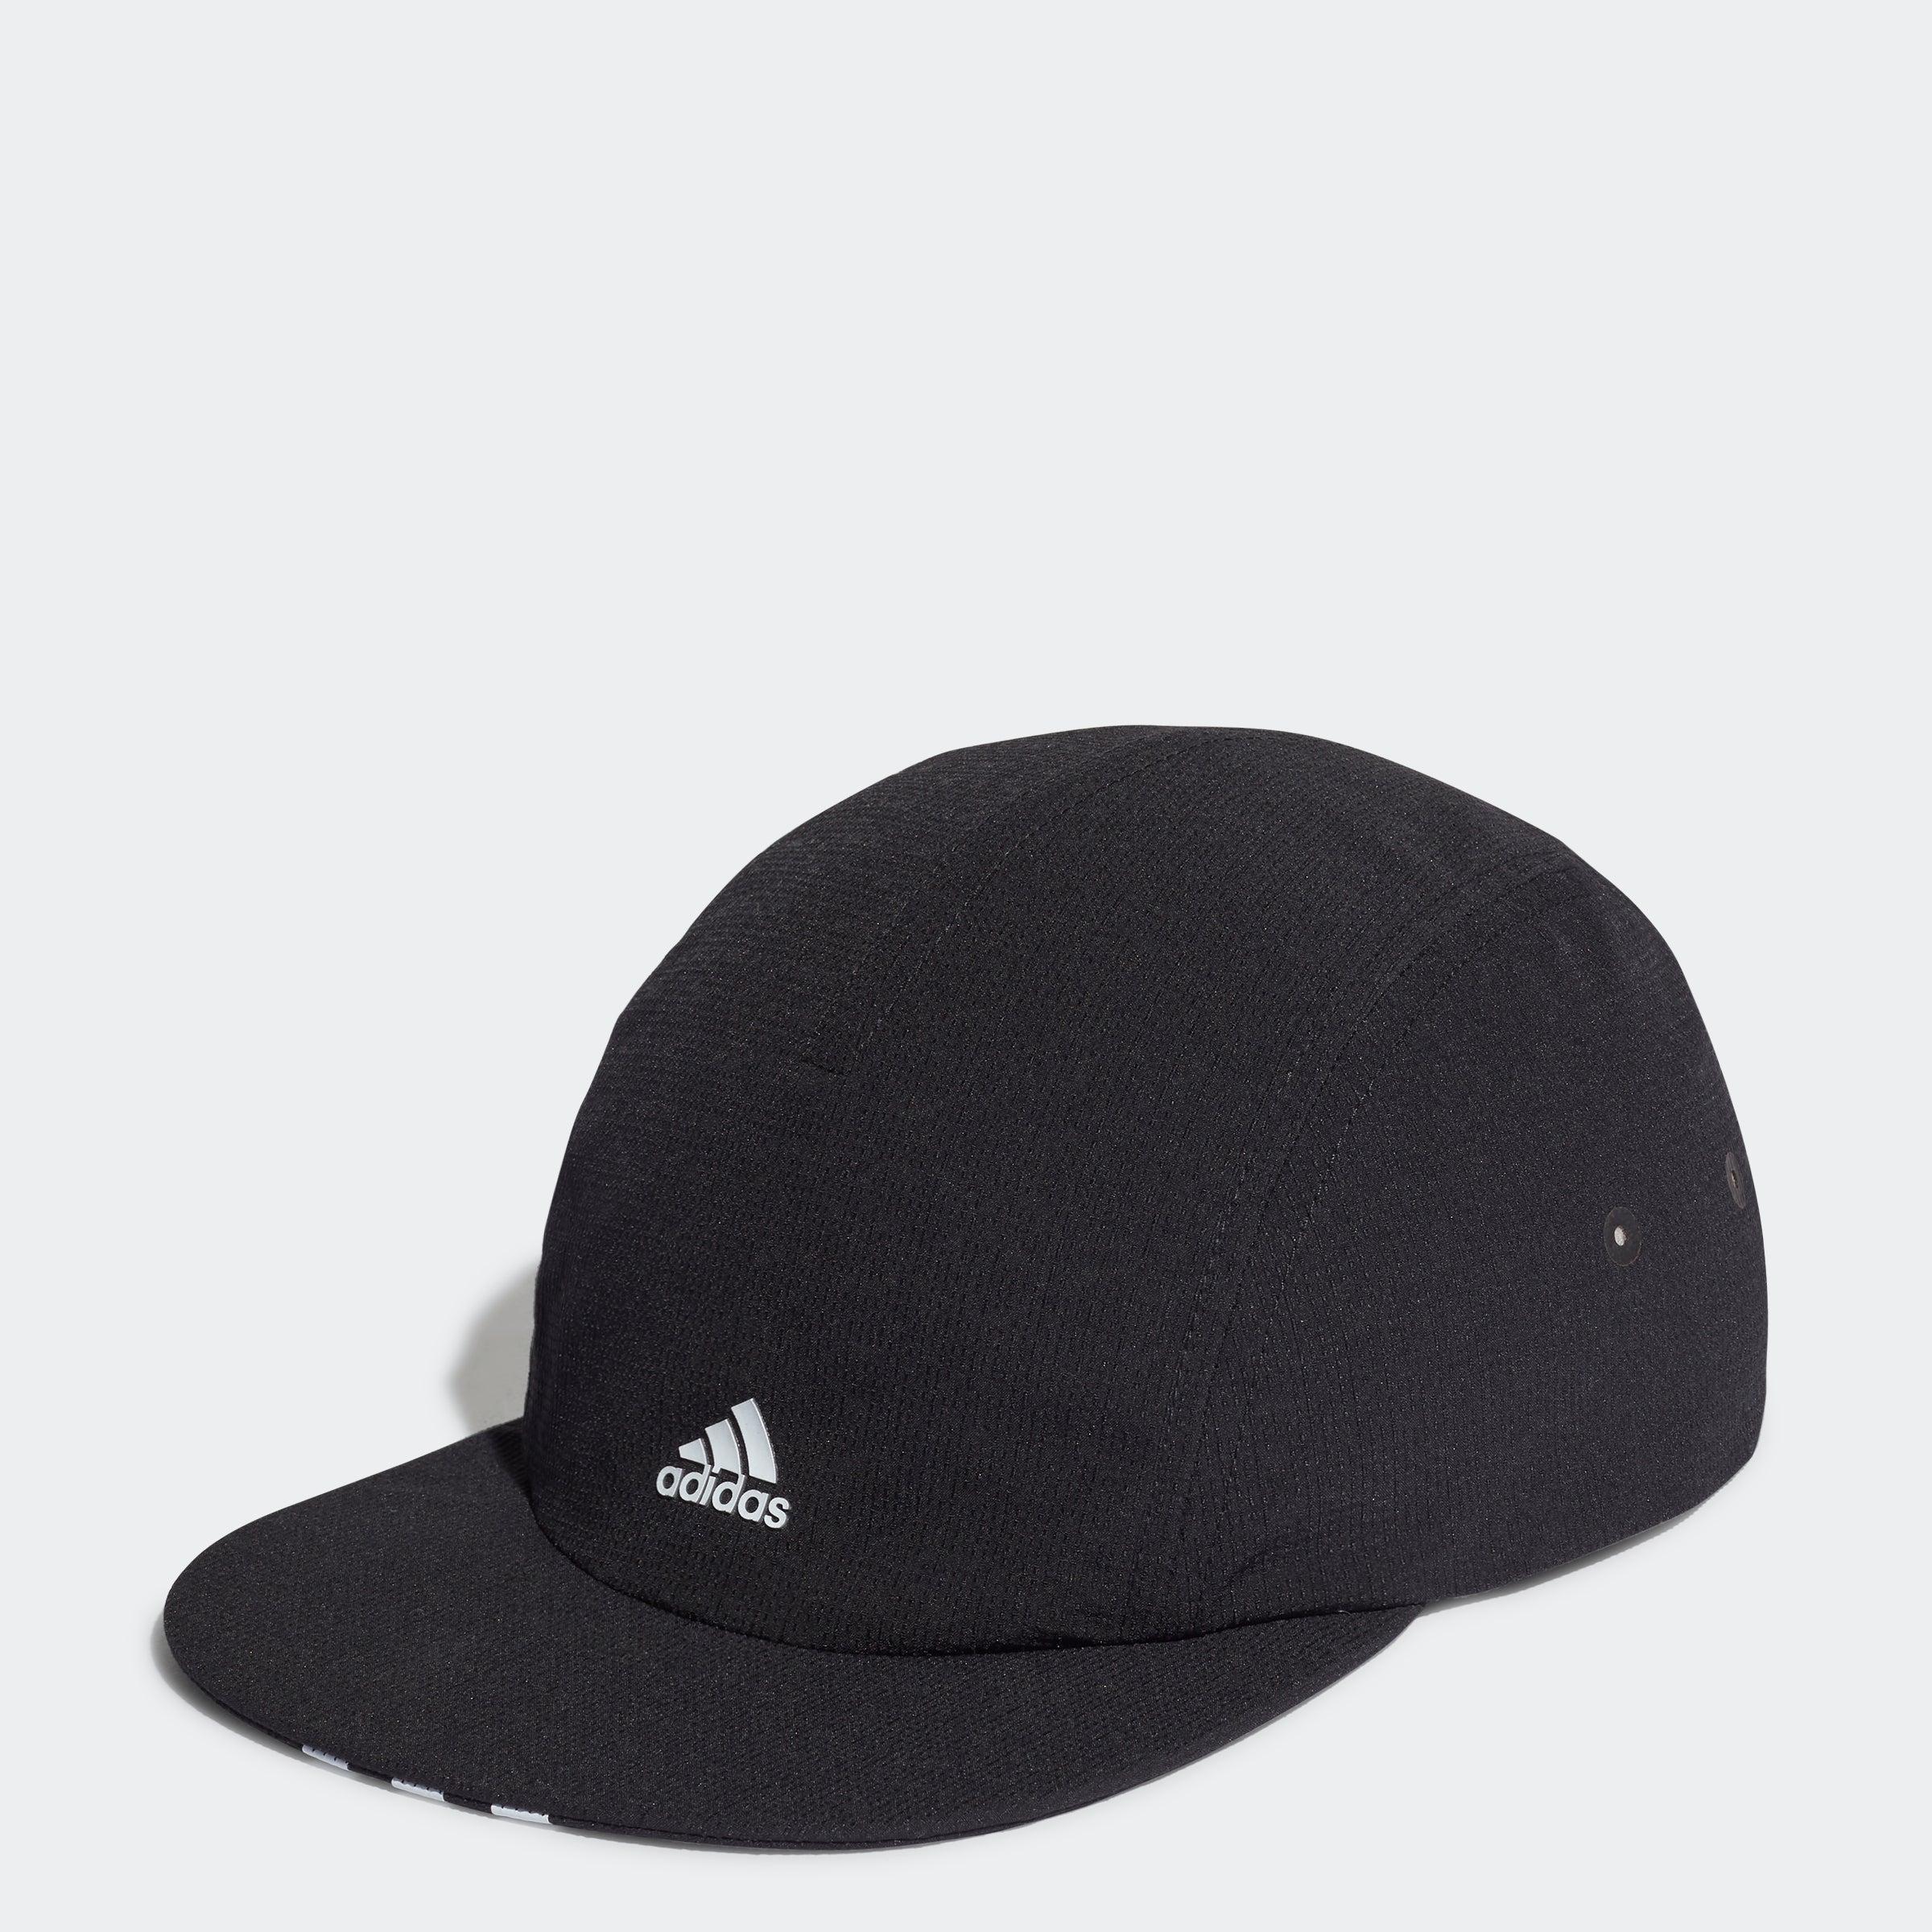 Buffalo Sabres Men's Adidas Structured Snapback Hat